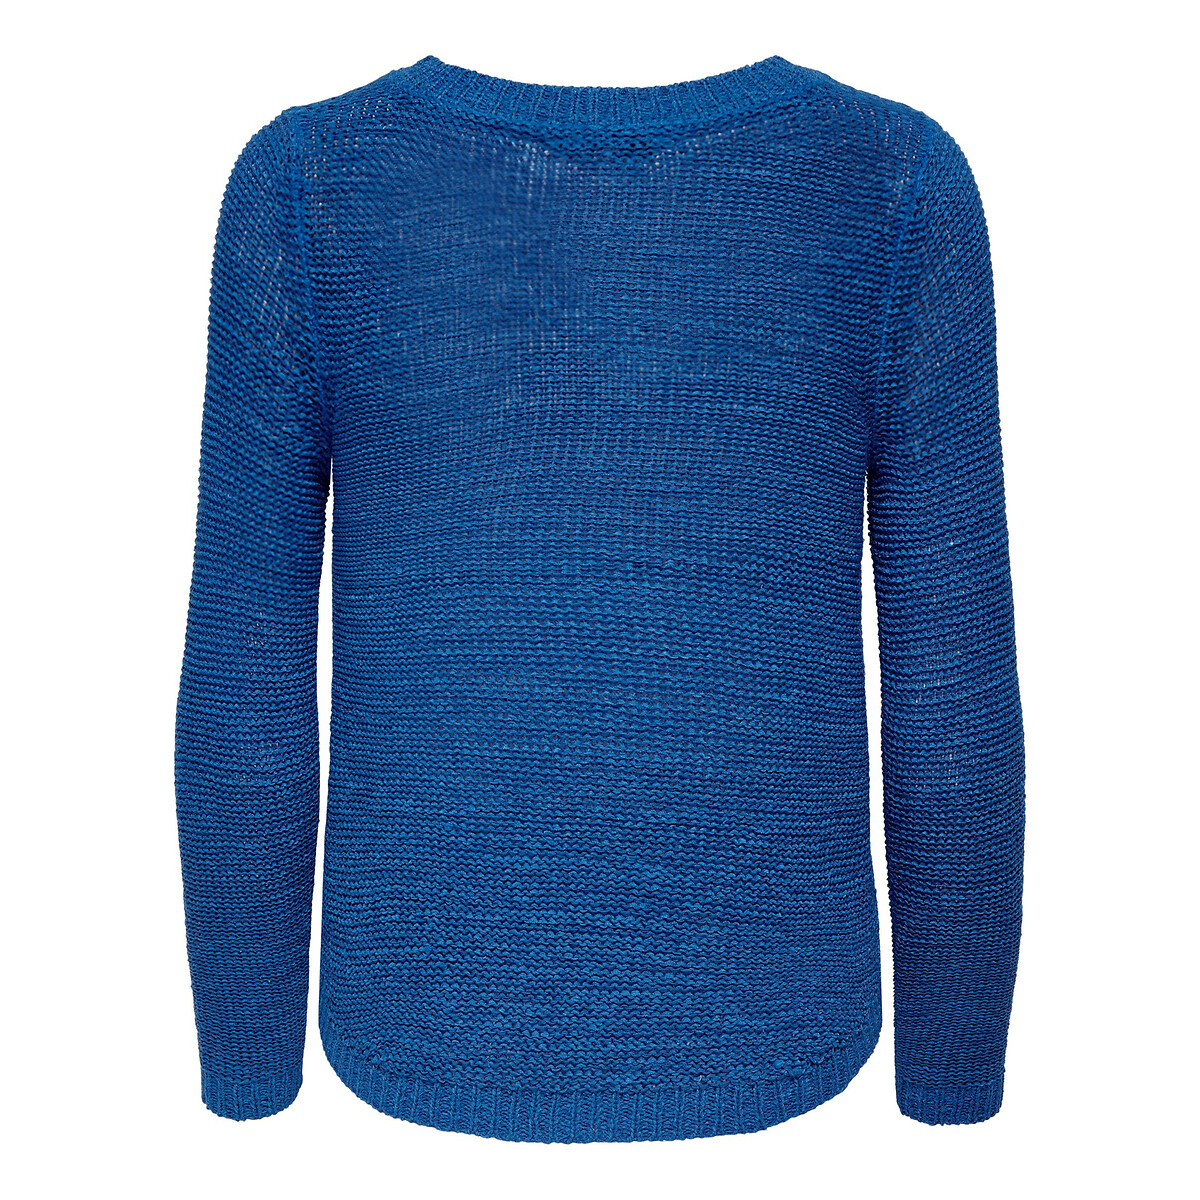 Пуловер С вырезом-лодочкой из тонкого трикотажа M синий LaRedoute, размер M - фото 5